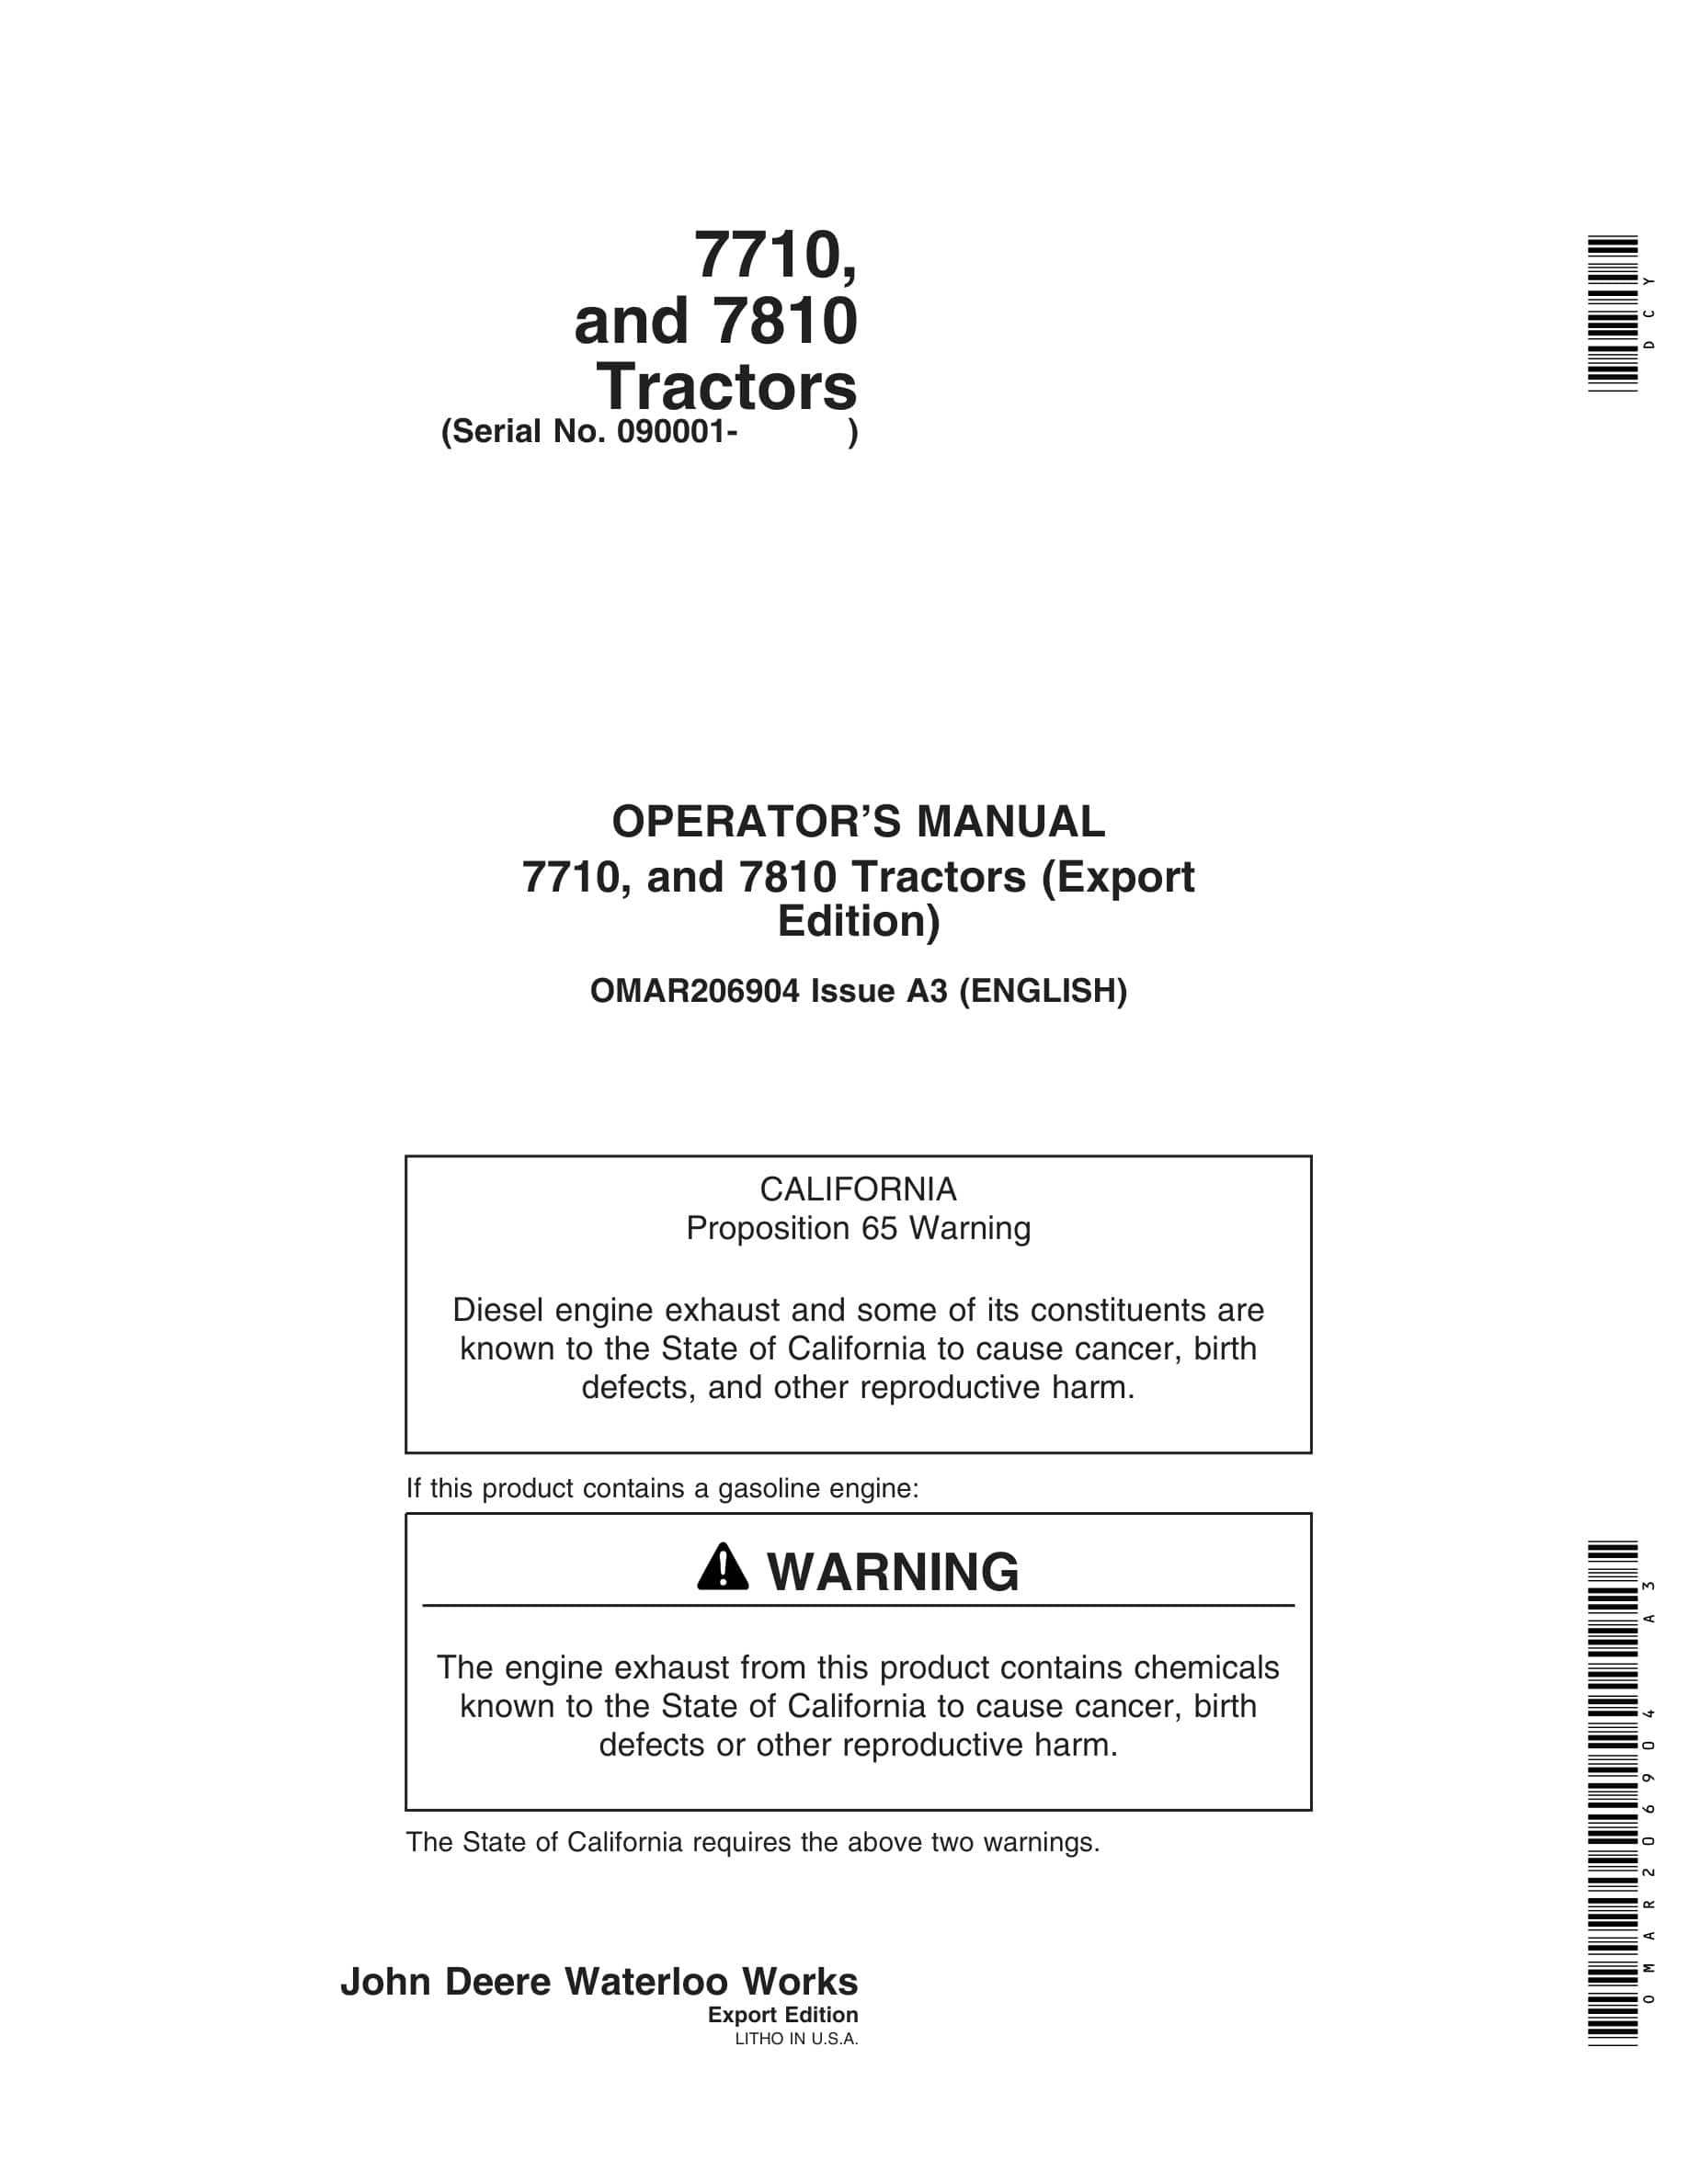 John Deere 7710, And 7810 Tractors Operator Manuals OMAR206904-1